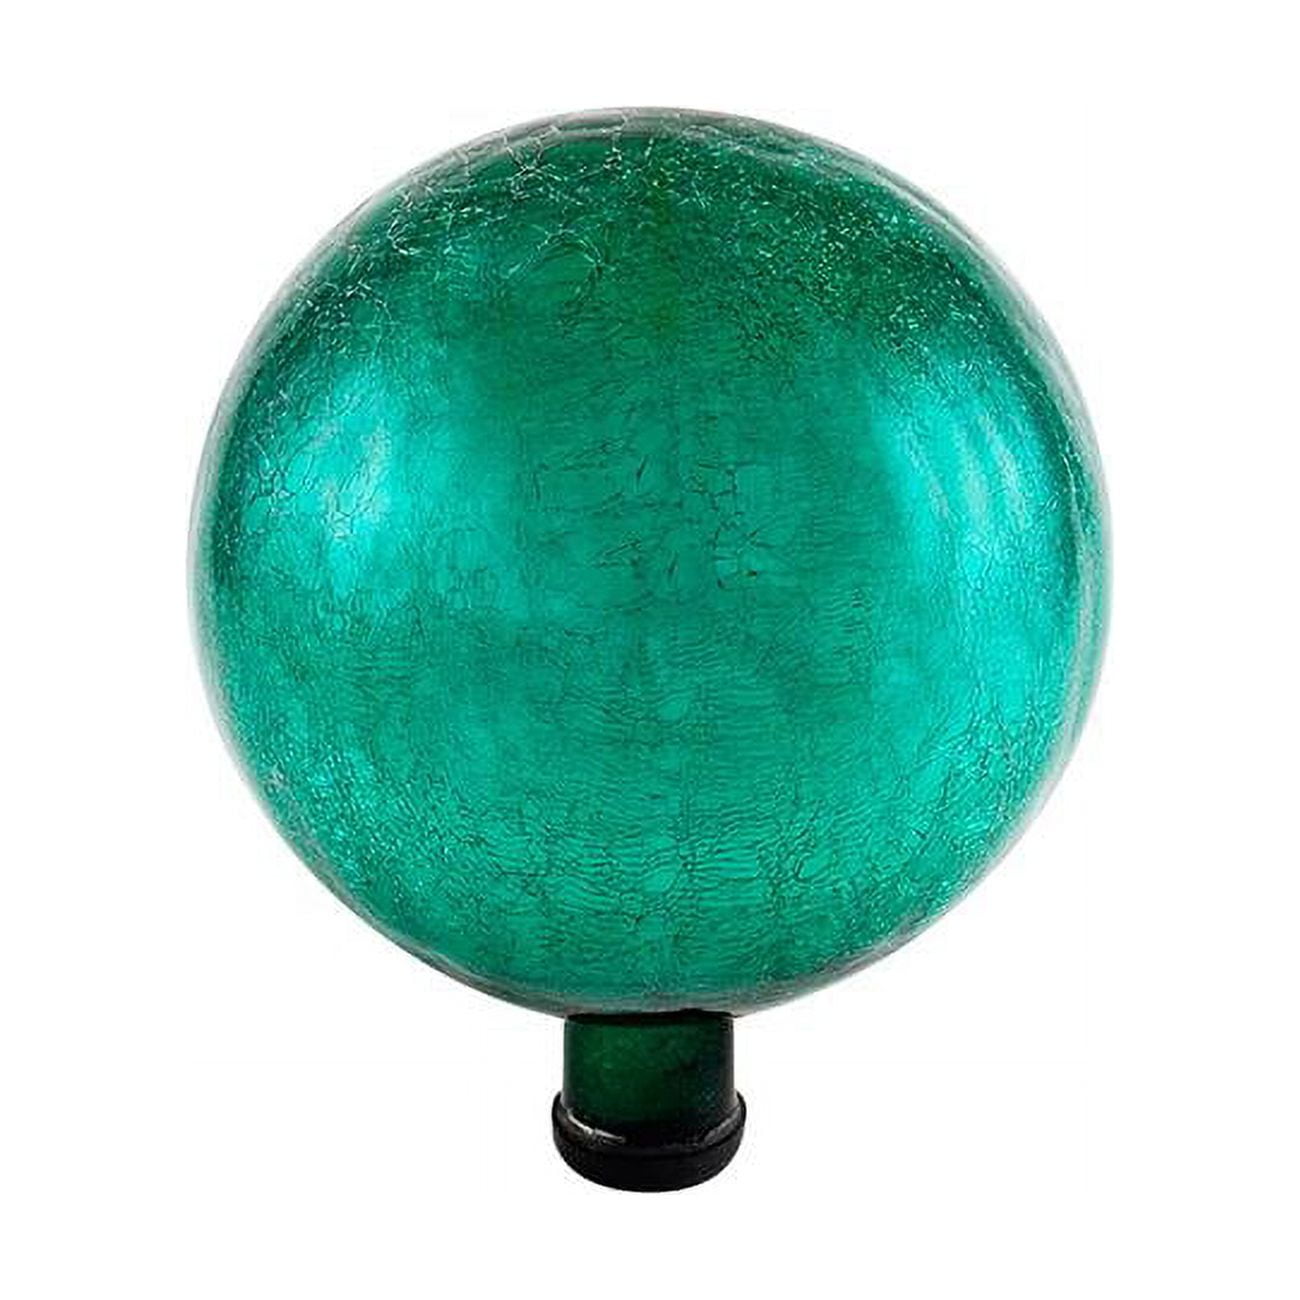 G10-eg-c 10 In. Gazing Globe - Emerald Green